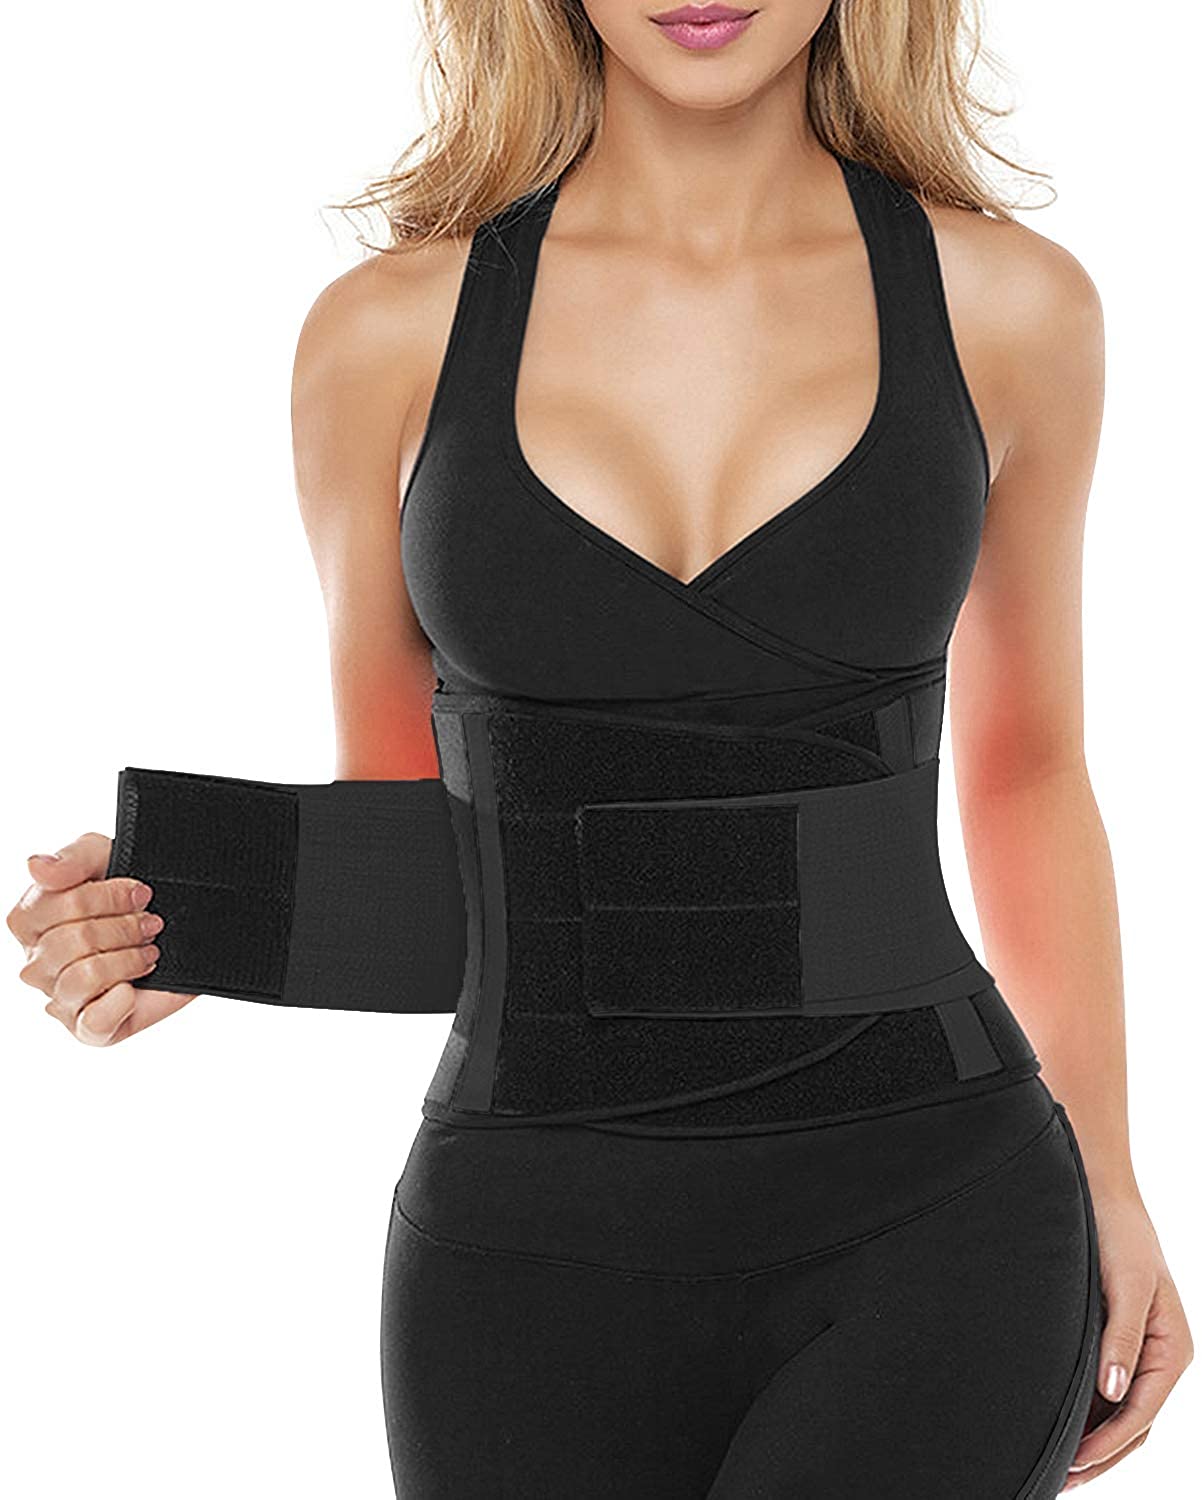 Price:$19.99    SHAPERX Waist Trainer Belt for Women - Waist Trimmer Slimming Belly Band Body Shaper Sports Girdles Workout Belt  Clothing